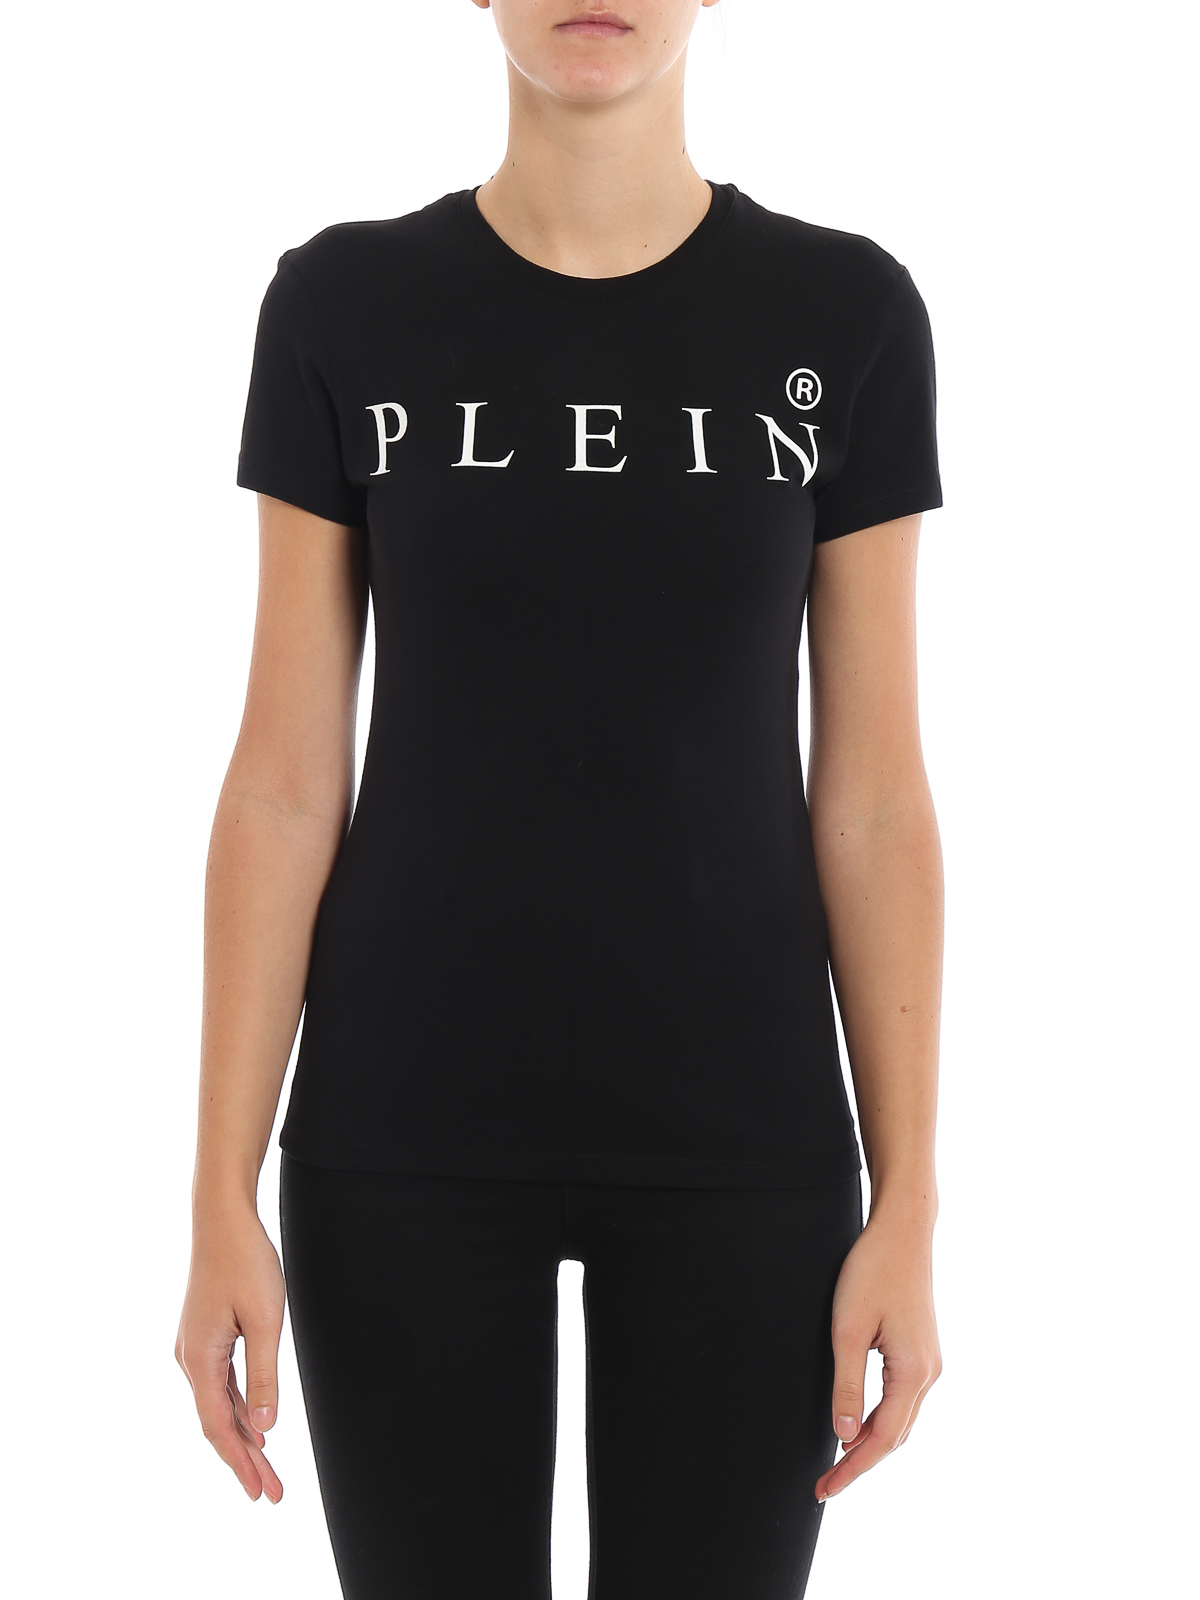 Philipp Plein - Rubber logo black T-shirt